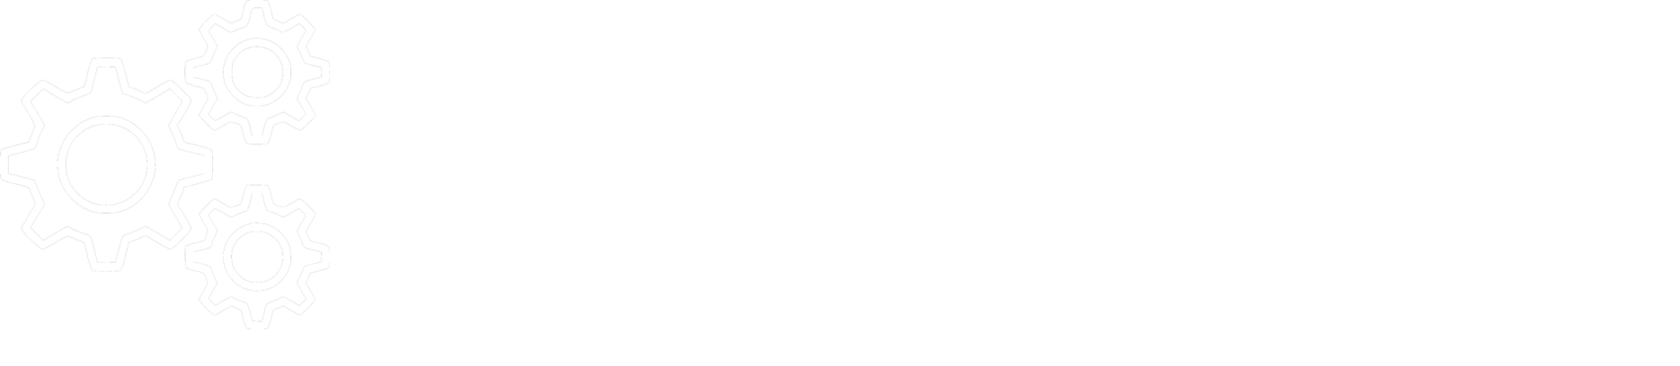 Krokus-service